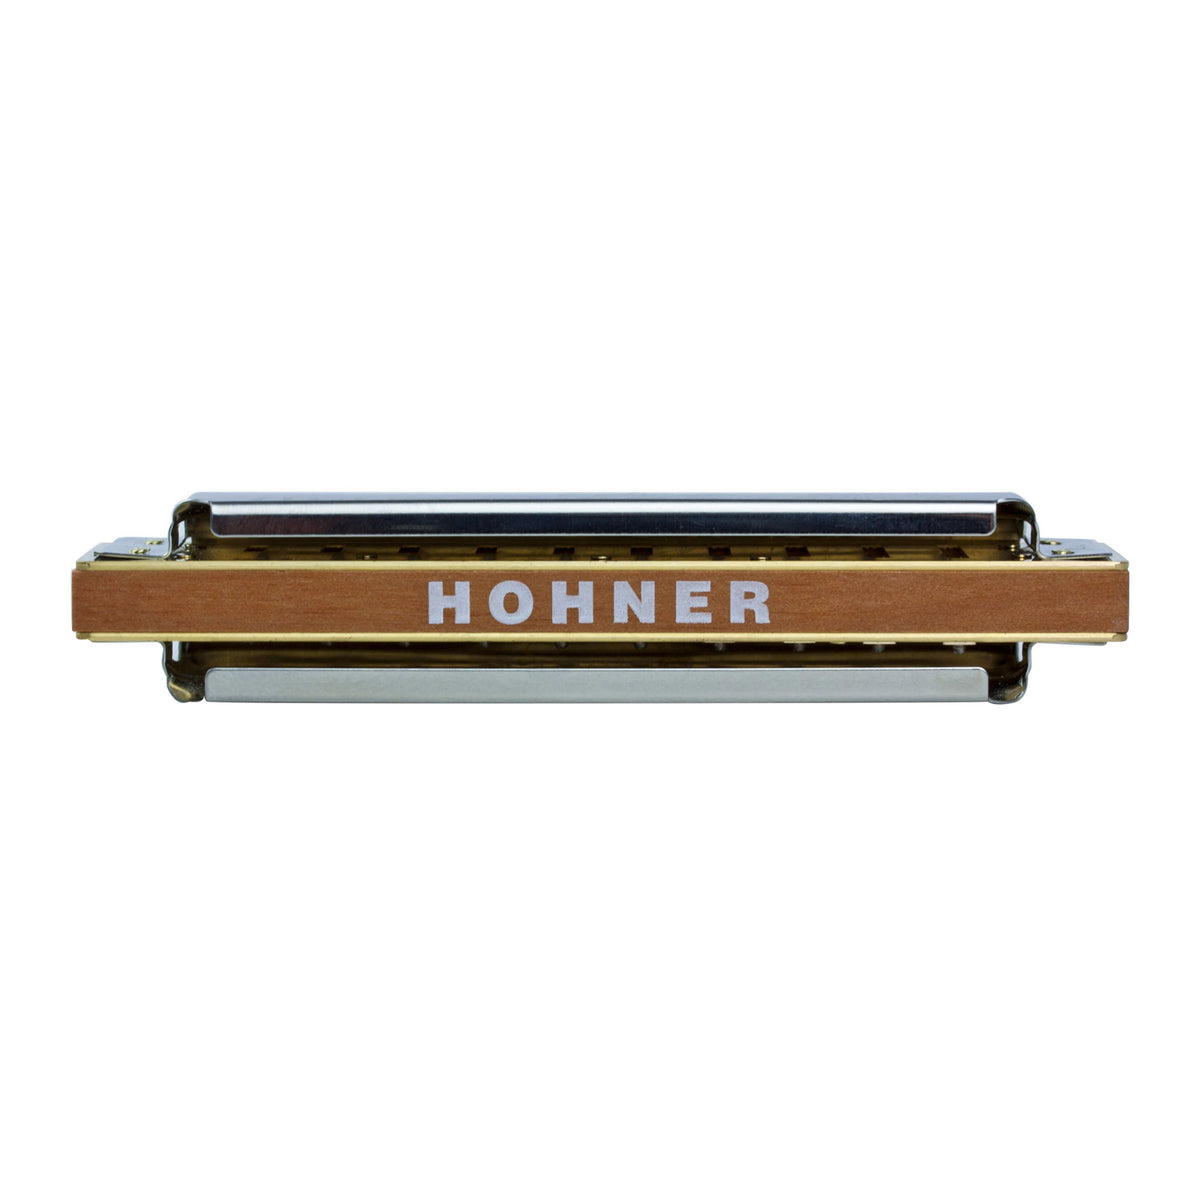 Hohner 1896BX Marine Band Harmonica, Key of C